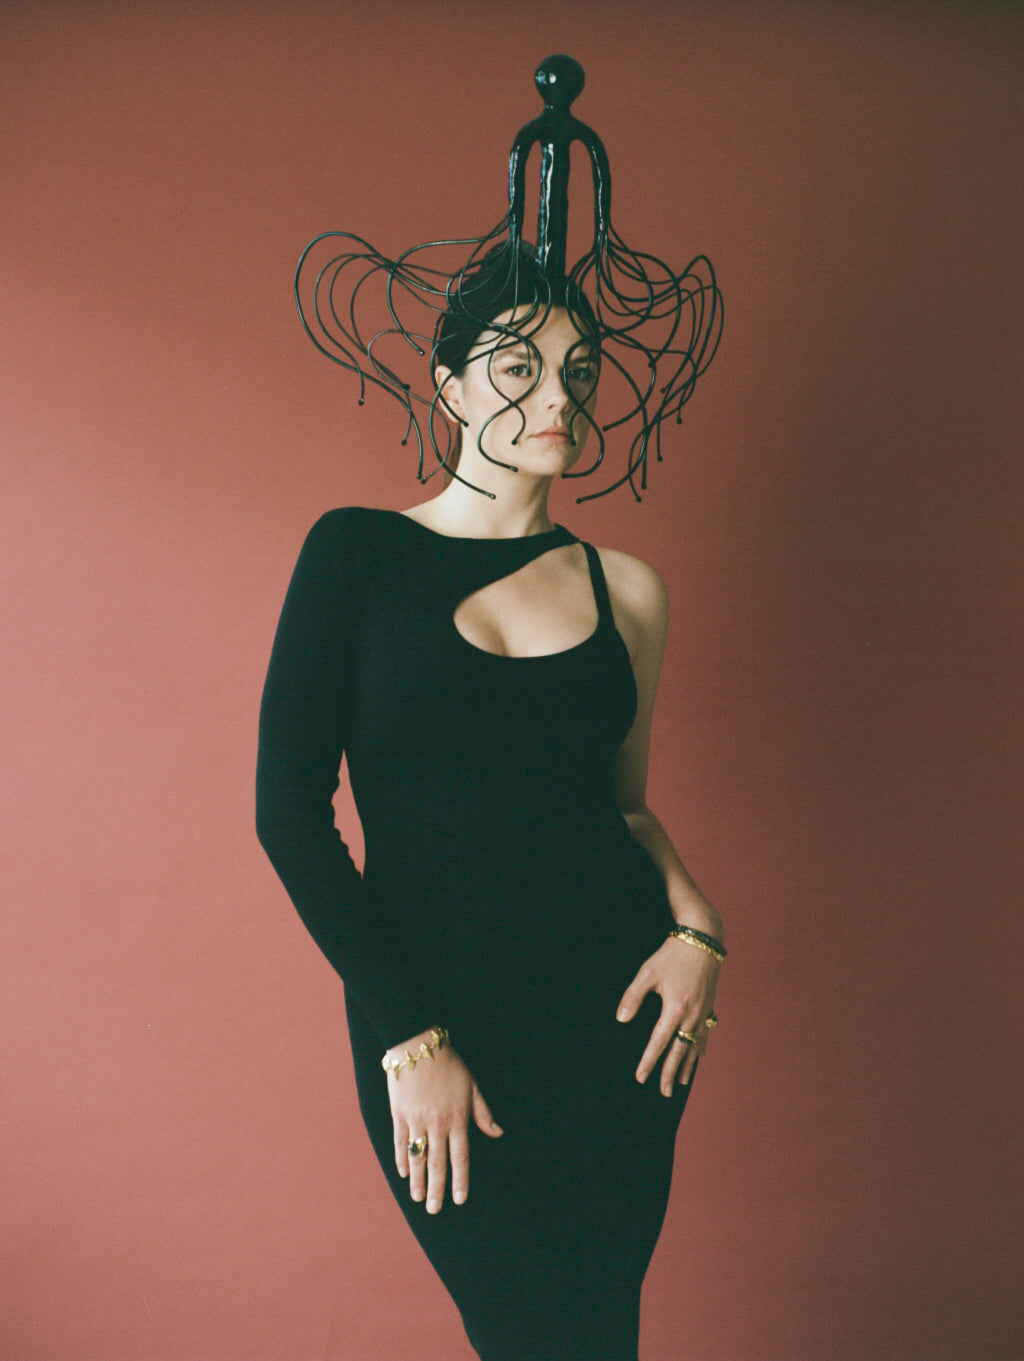 Model wearing slick black dress and headpiece based on Irish history